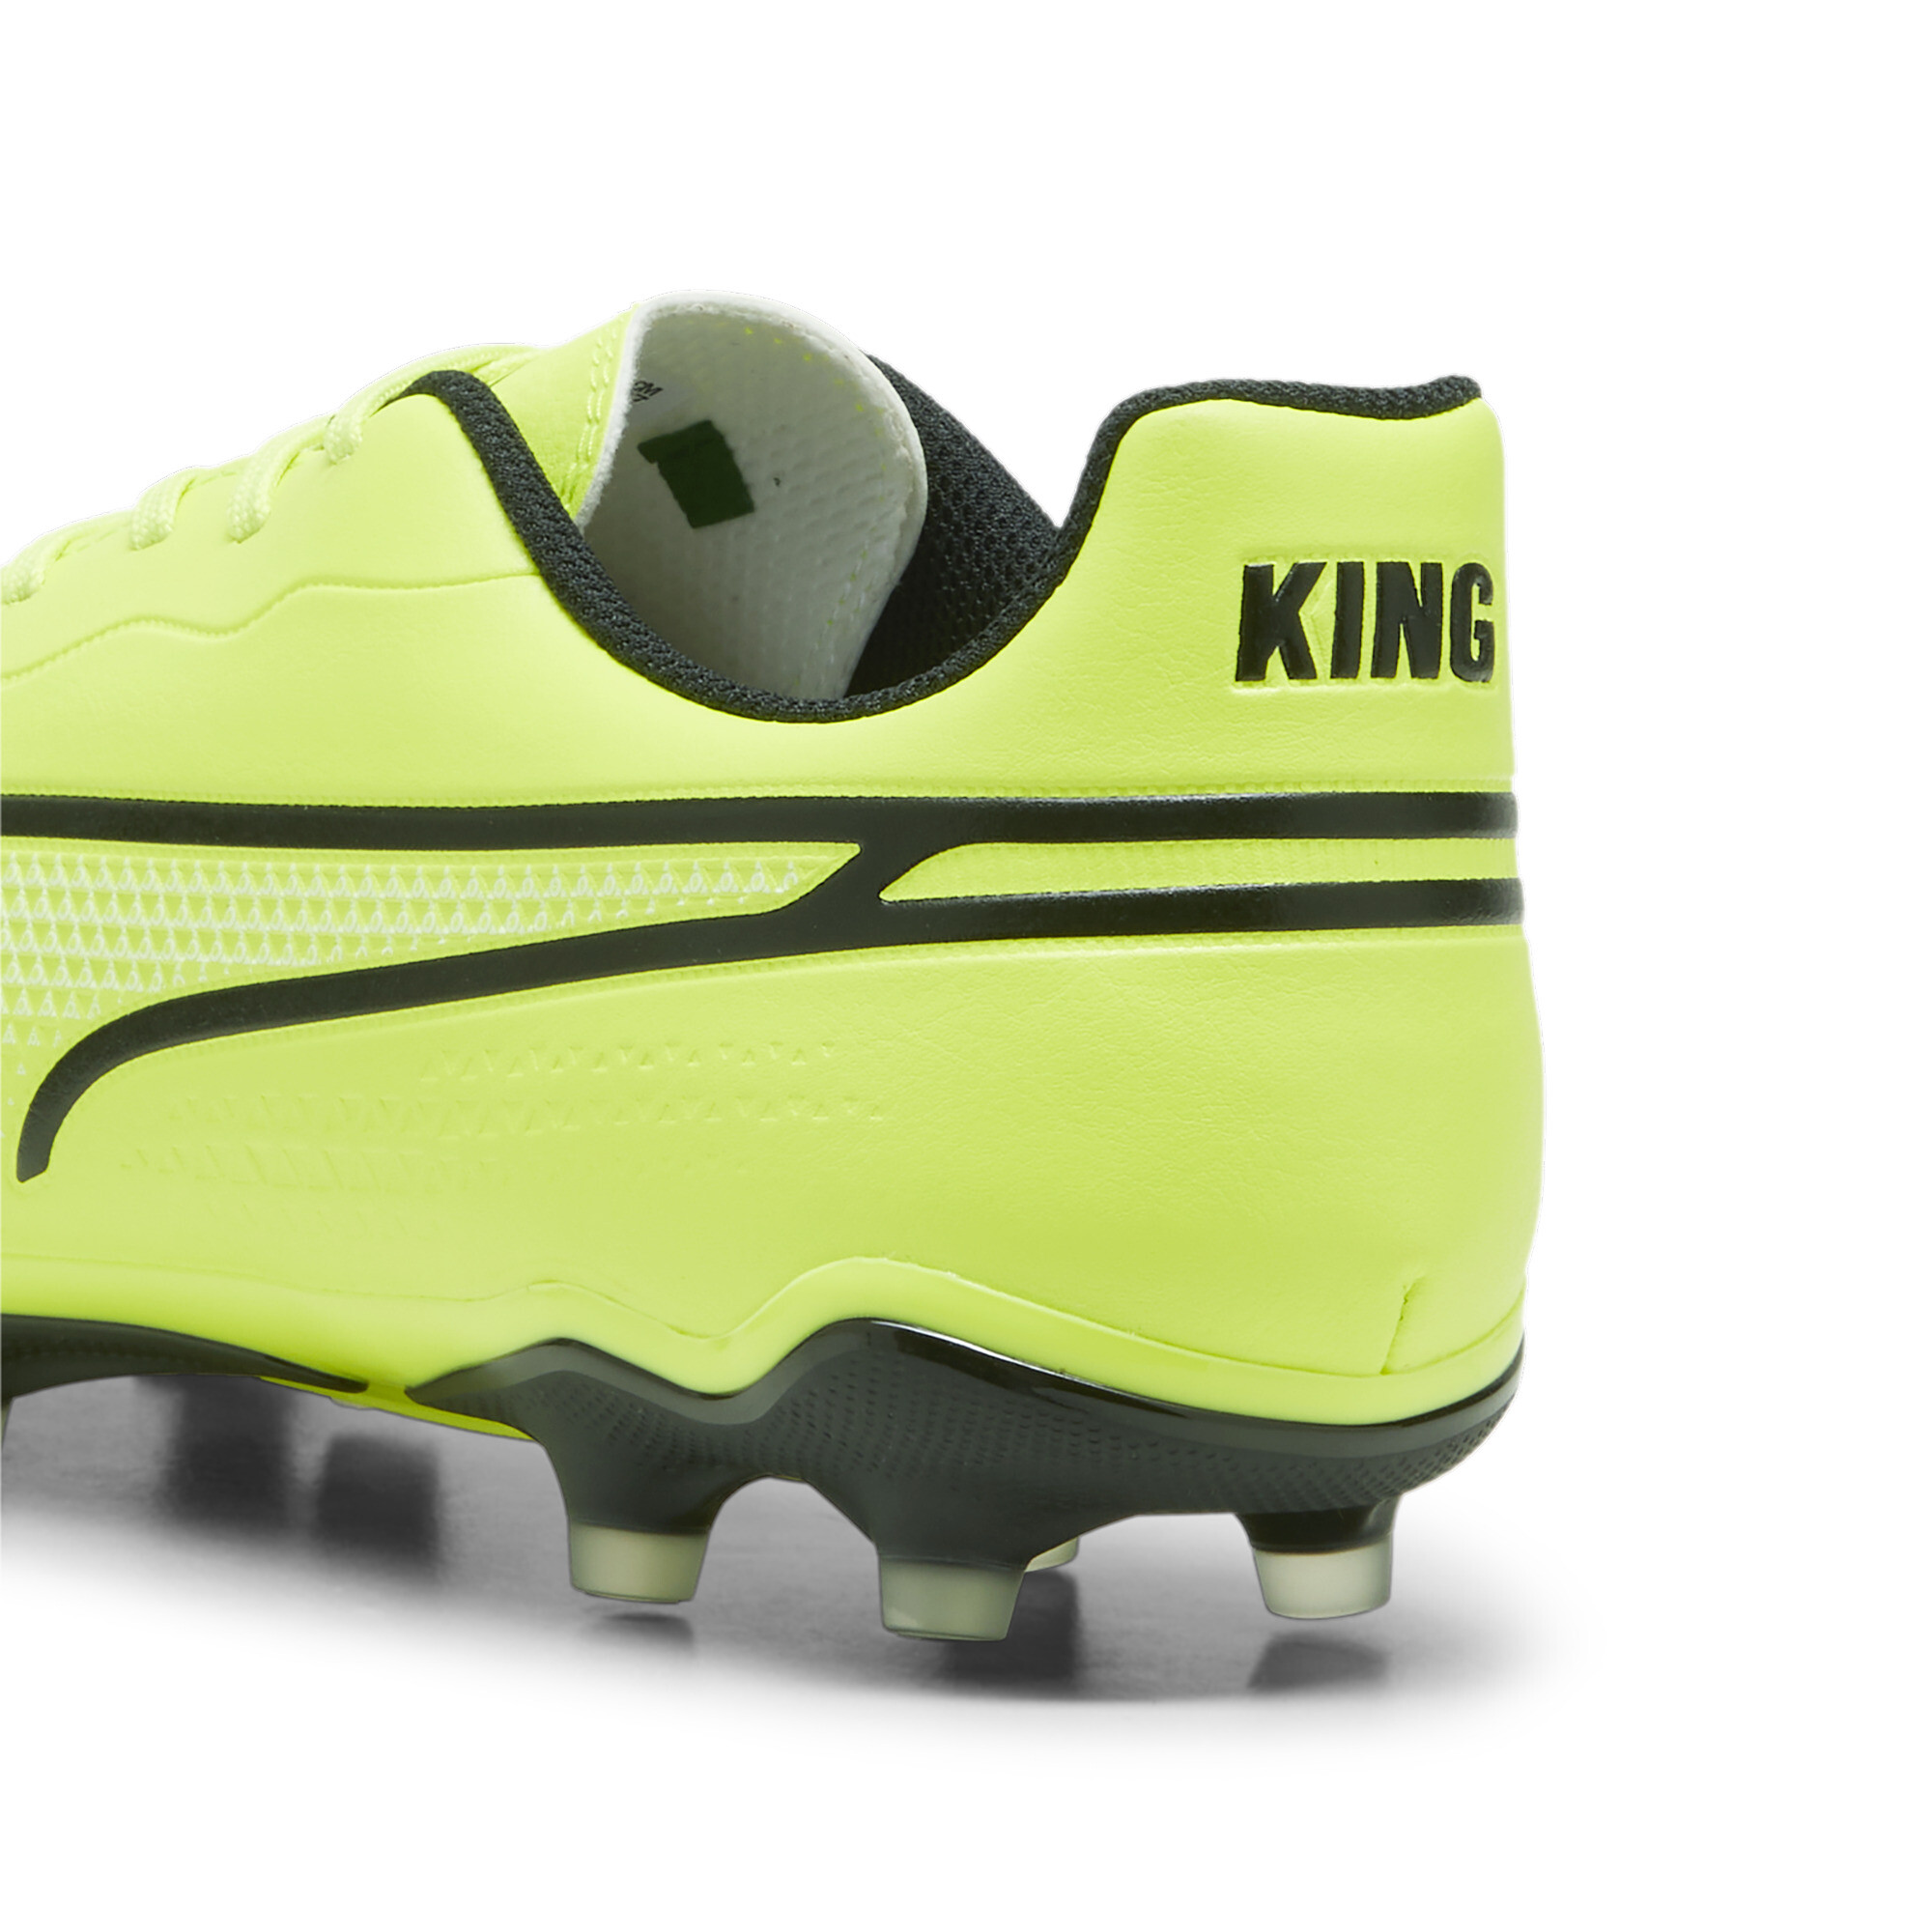 Men's PUMA KING MATCH FG/AG Football Boots In Green, Size EU 40.5